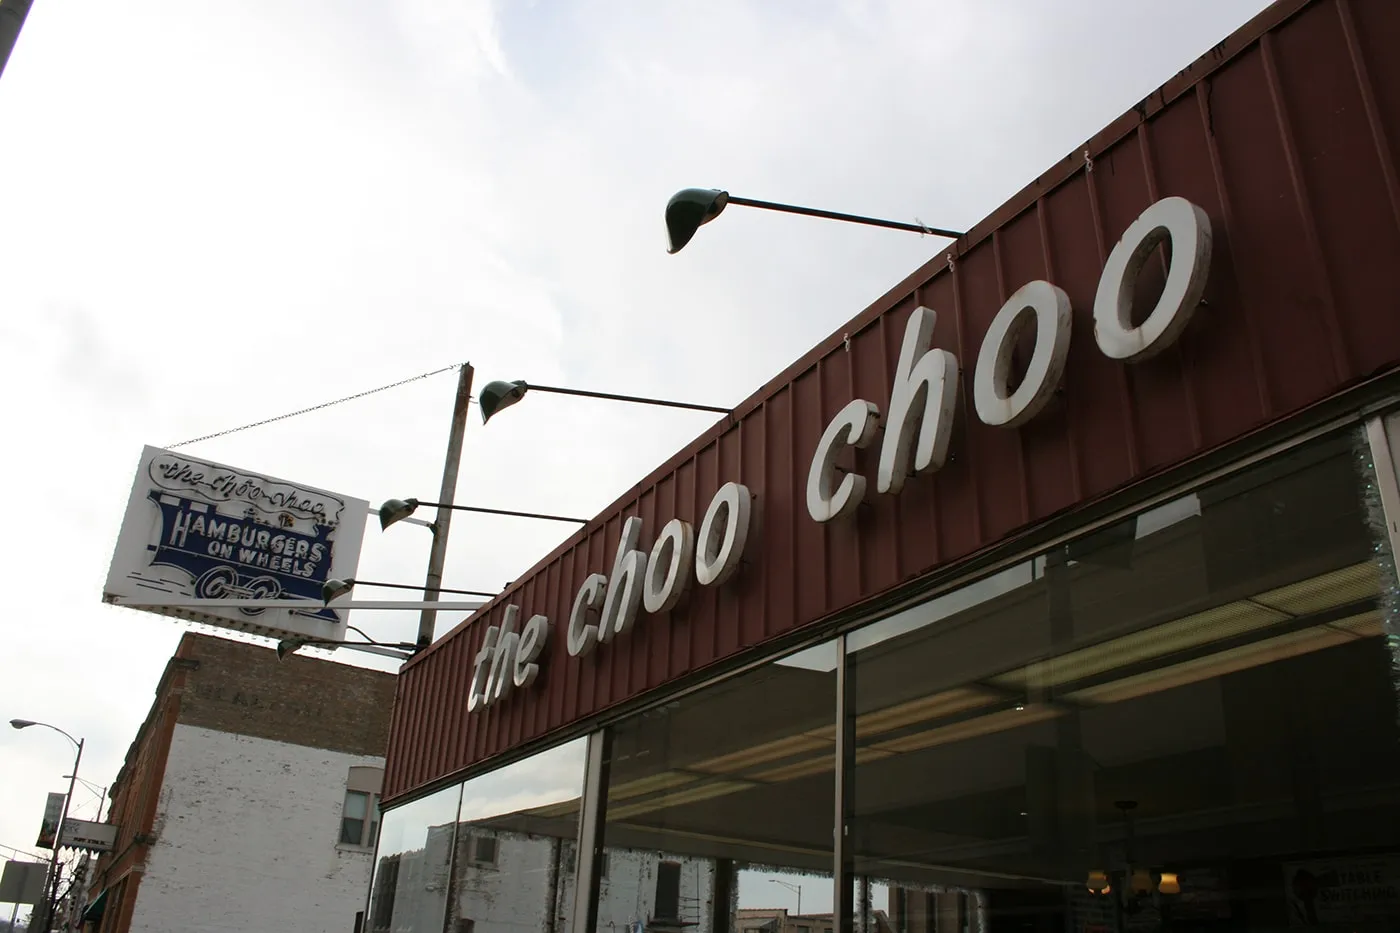 Choo-Choo Diner: Hamburgers on Wheels in Des Plaines, Illinois - Train Themed Restaurant